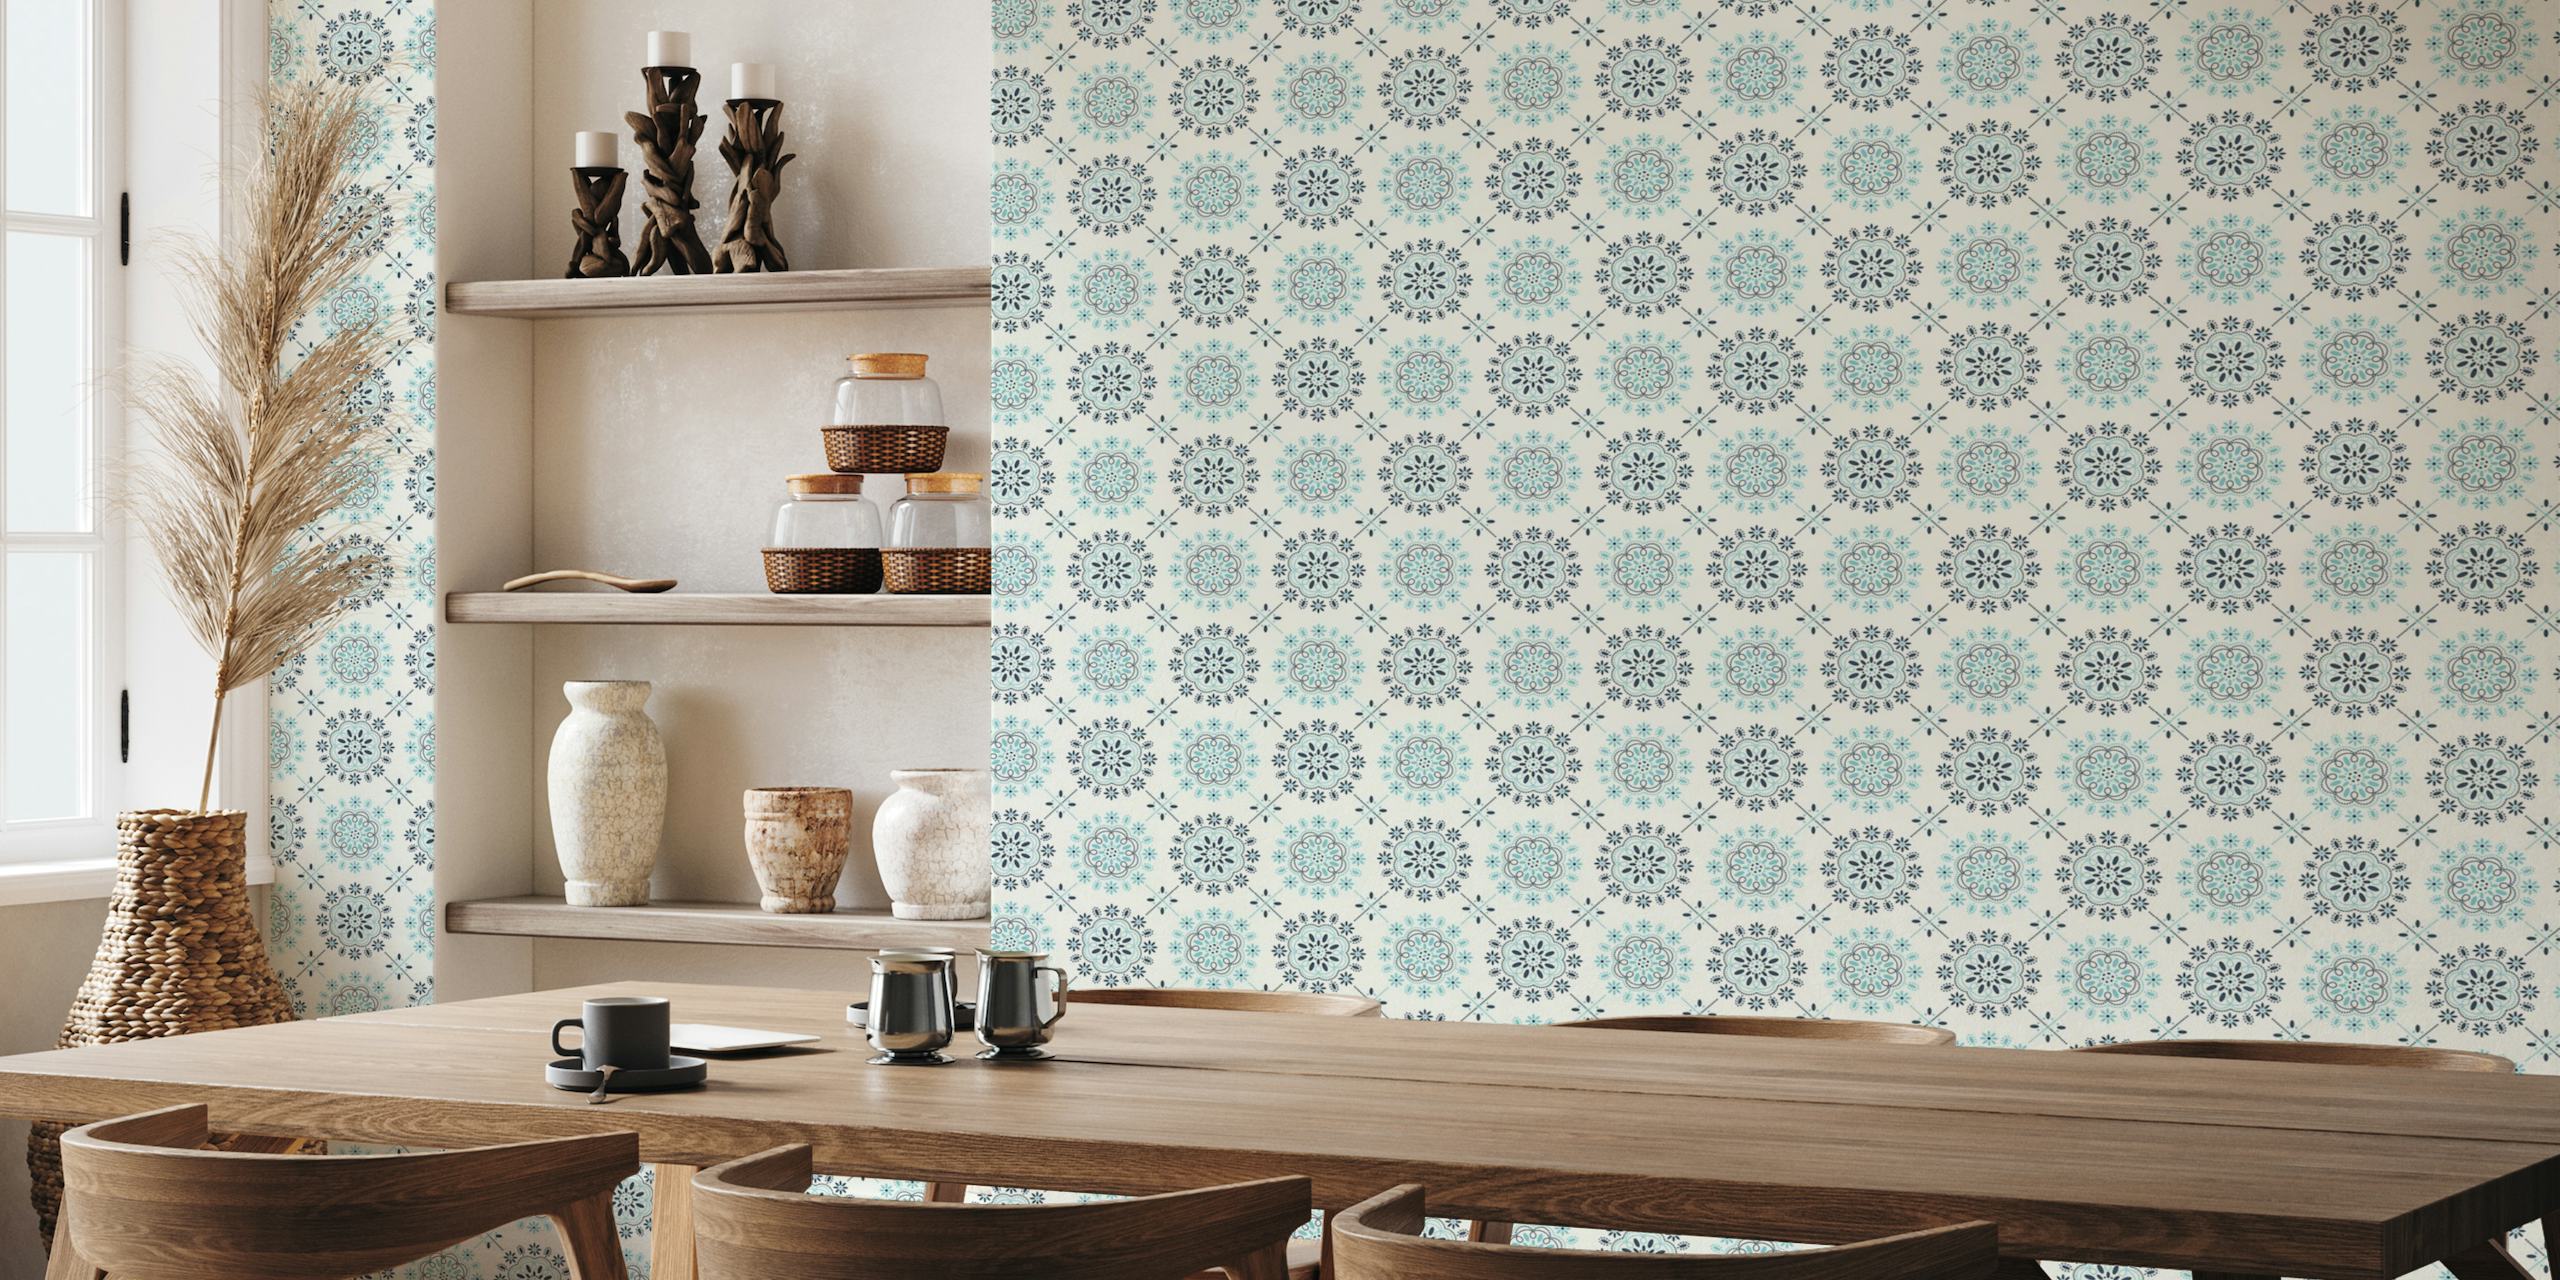 Blue and white kitchen tile ταπετσαρία